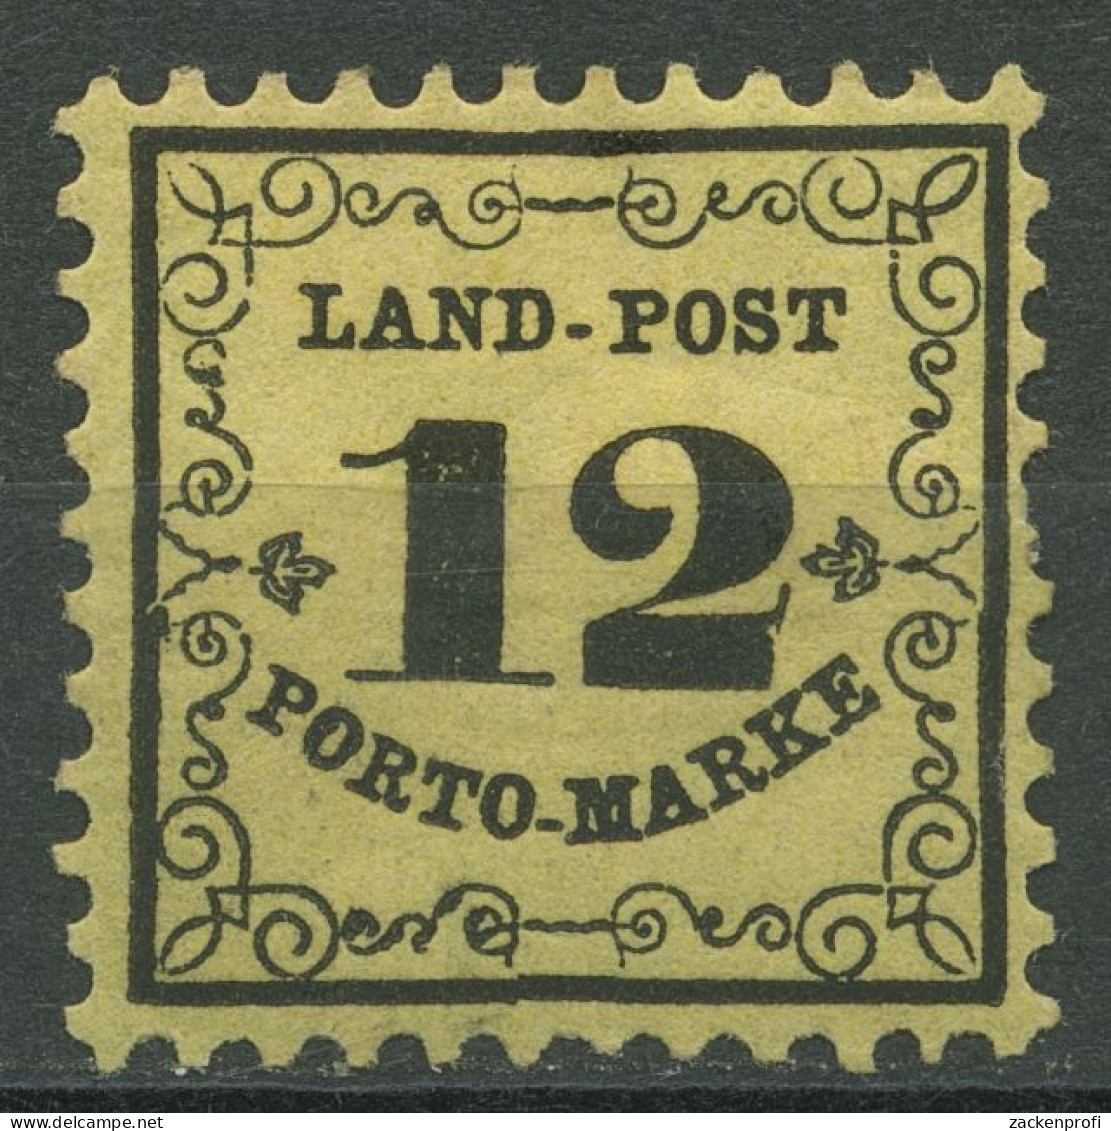 Baden 1862 Landpost-Portomarke 12 Kreuzer 3 X Mit Falz, Zahnfehler - Nuovi